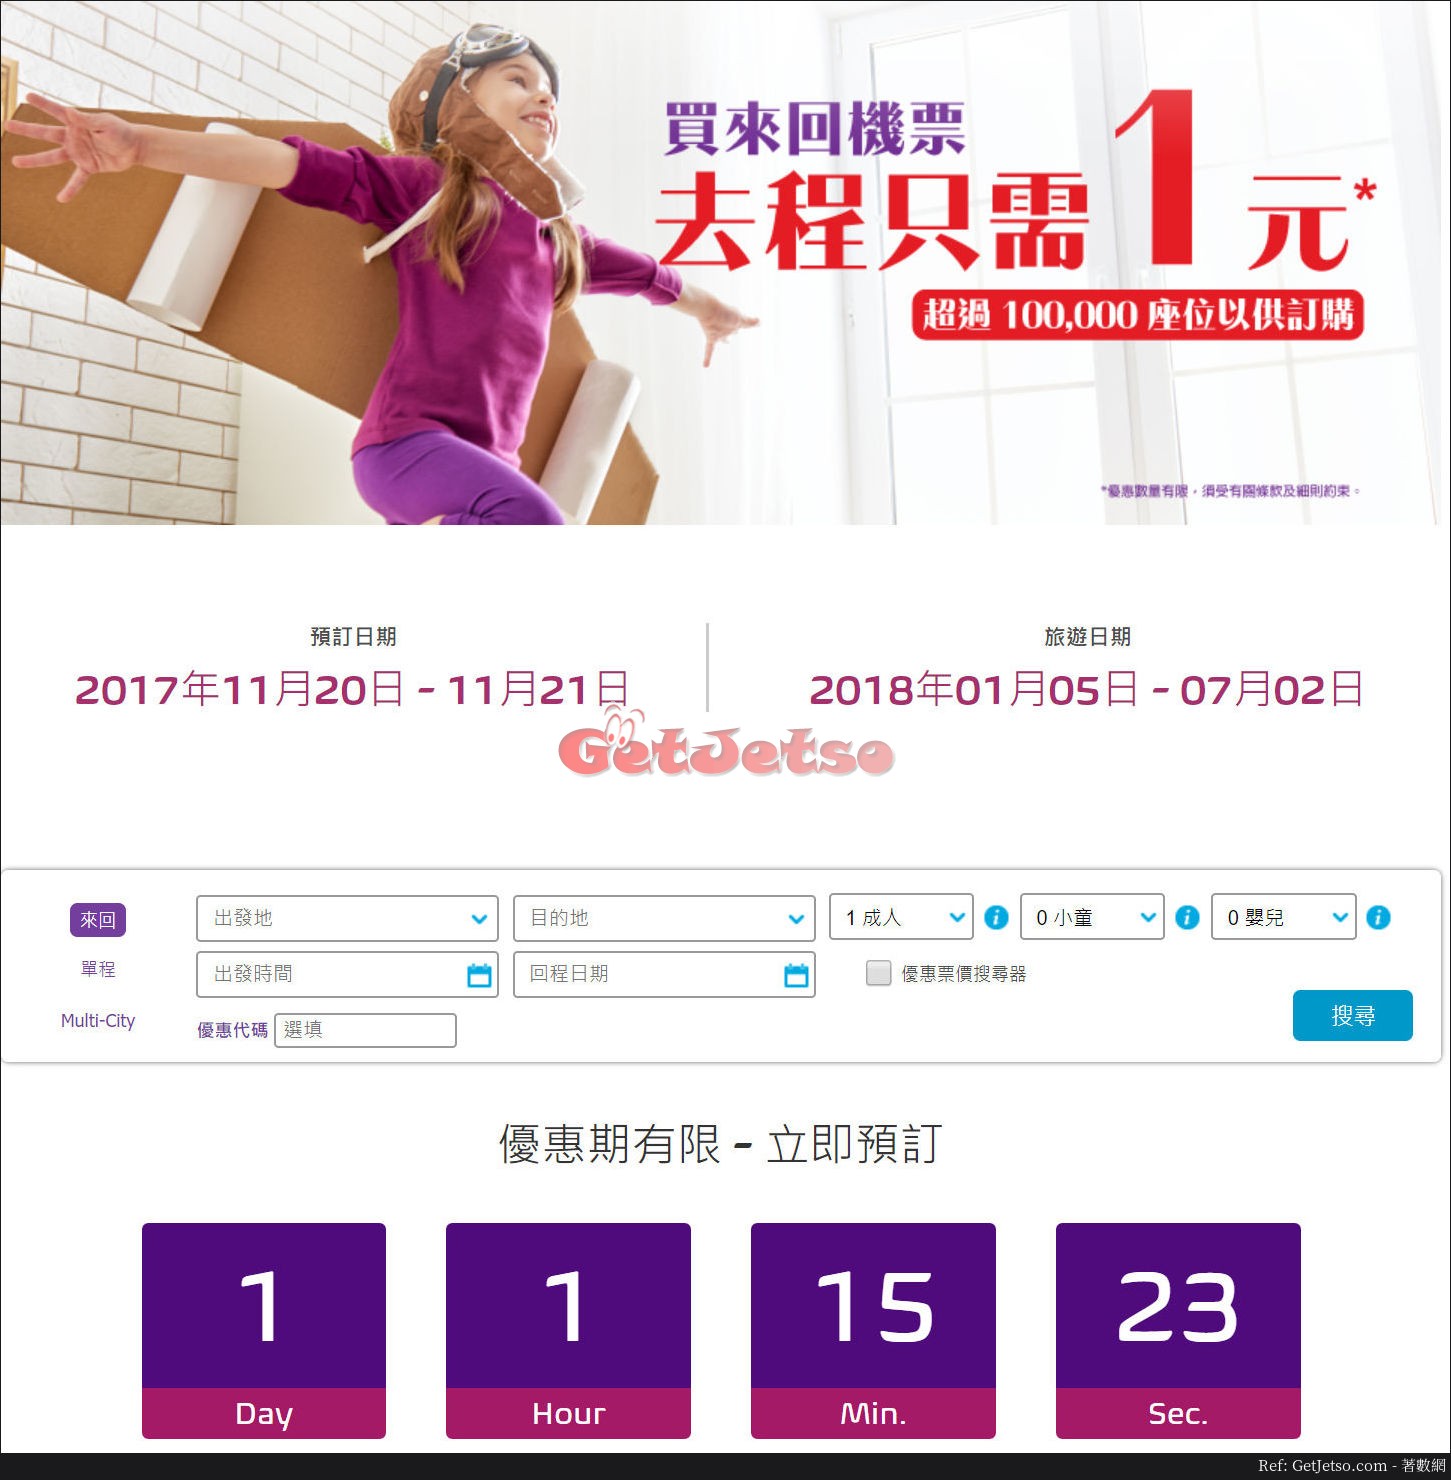 HK Express 買來回機票，去程機票優惠(至17年11月21日)圖片1